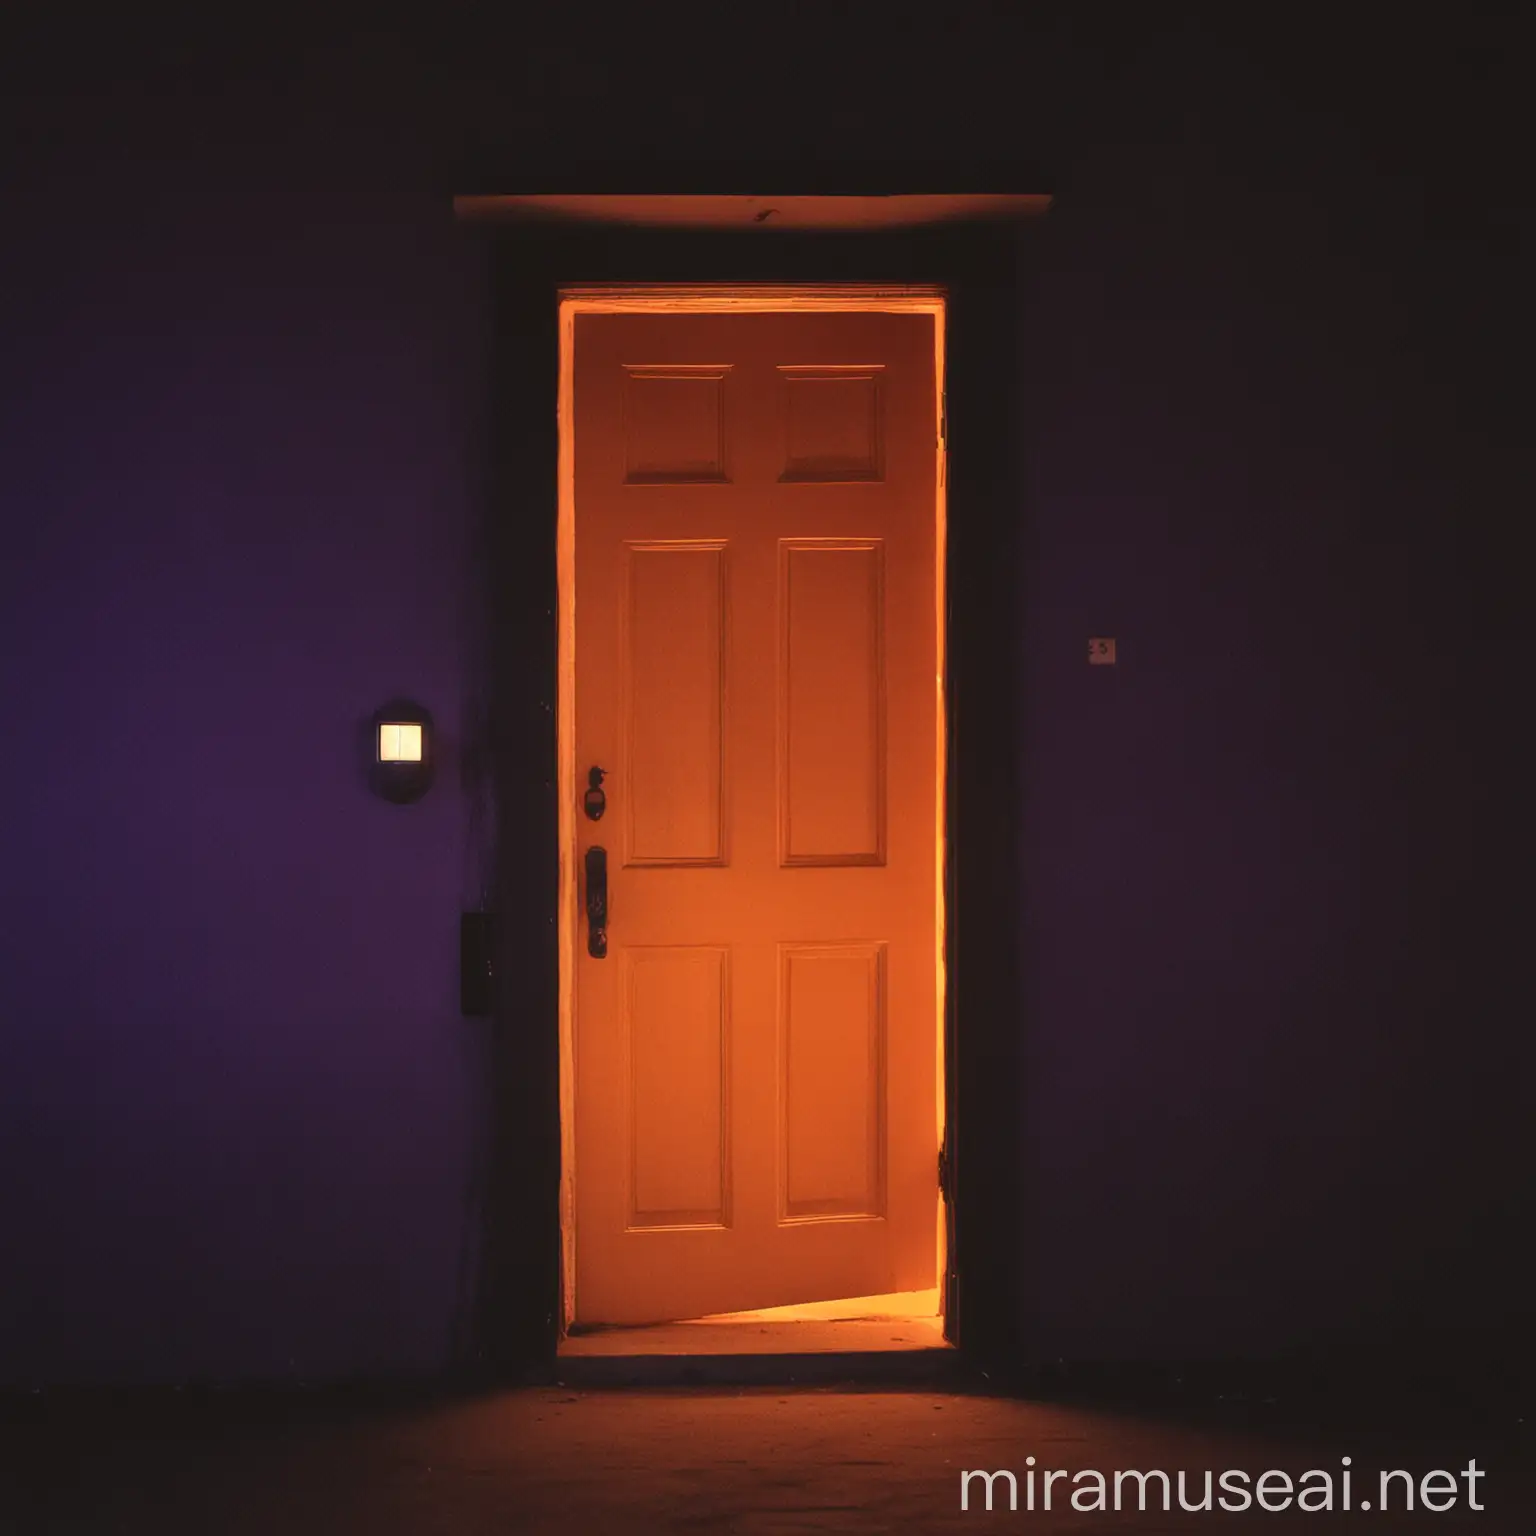 Mystical Entrance Orange Light Through Dark Purple Door